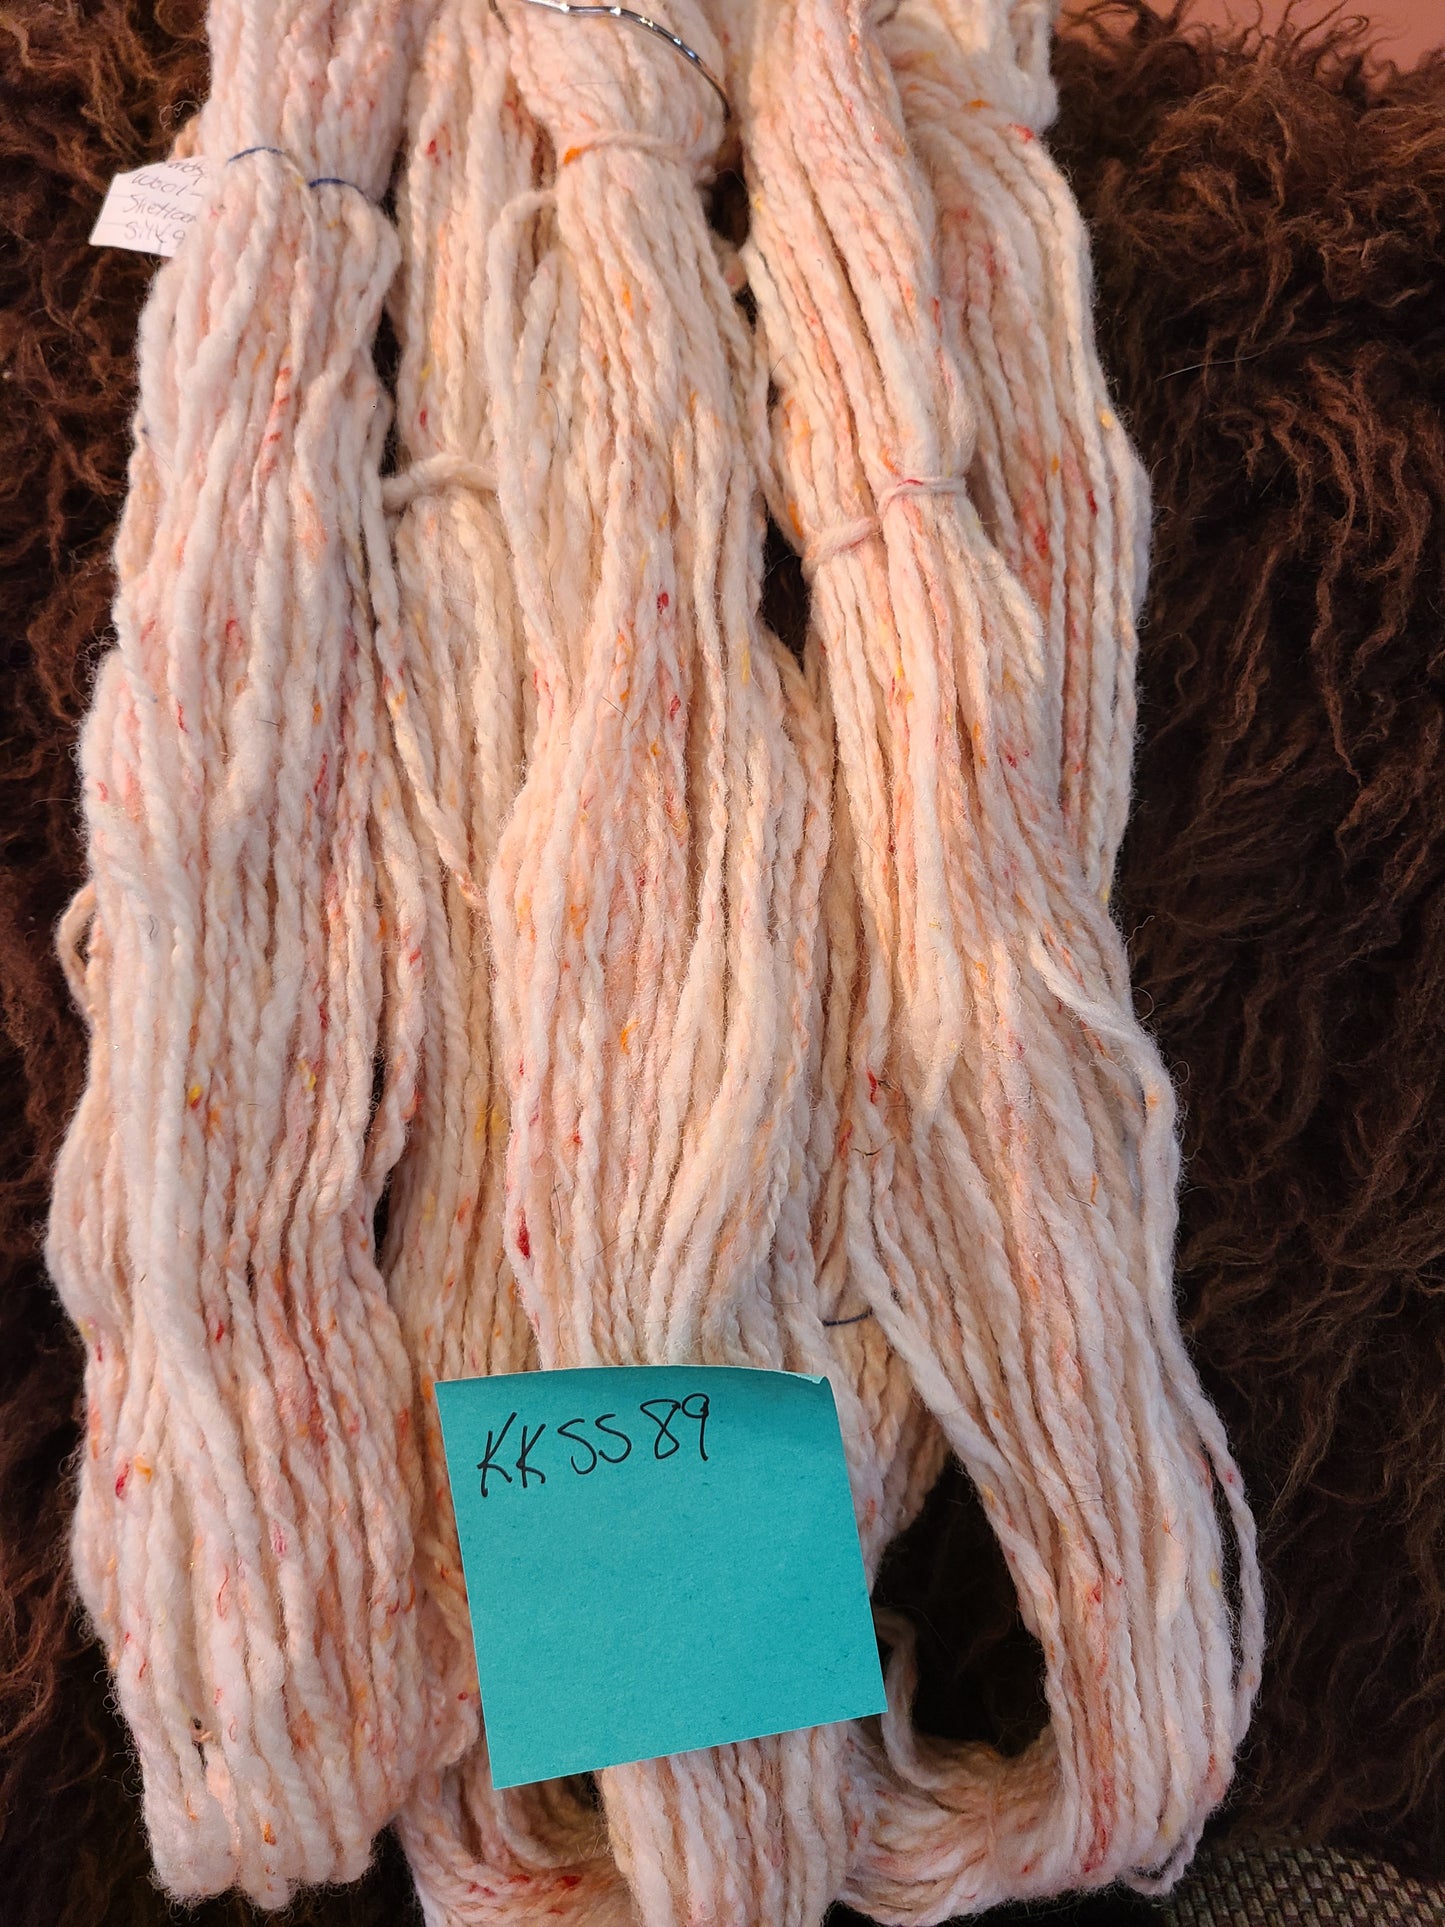 Yarn Handspun Knitters Knot- White/Pink  DK Weight KKSS89 2ply - 161yards & 8.9oz